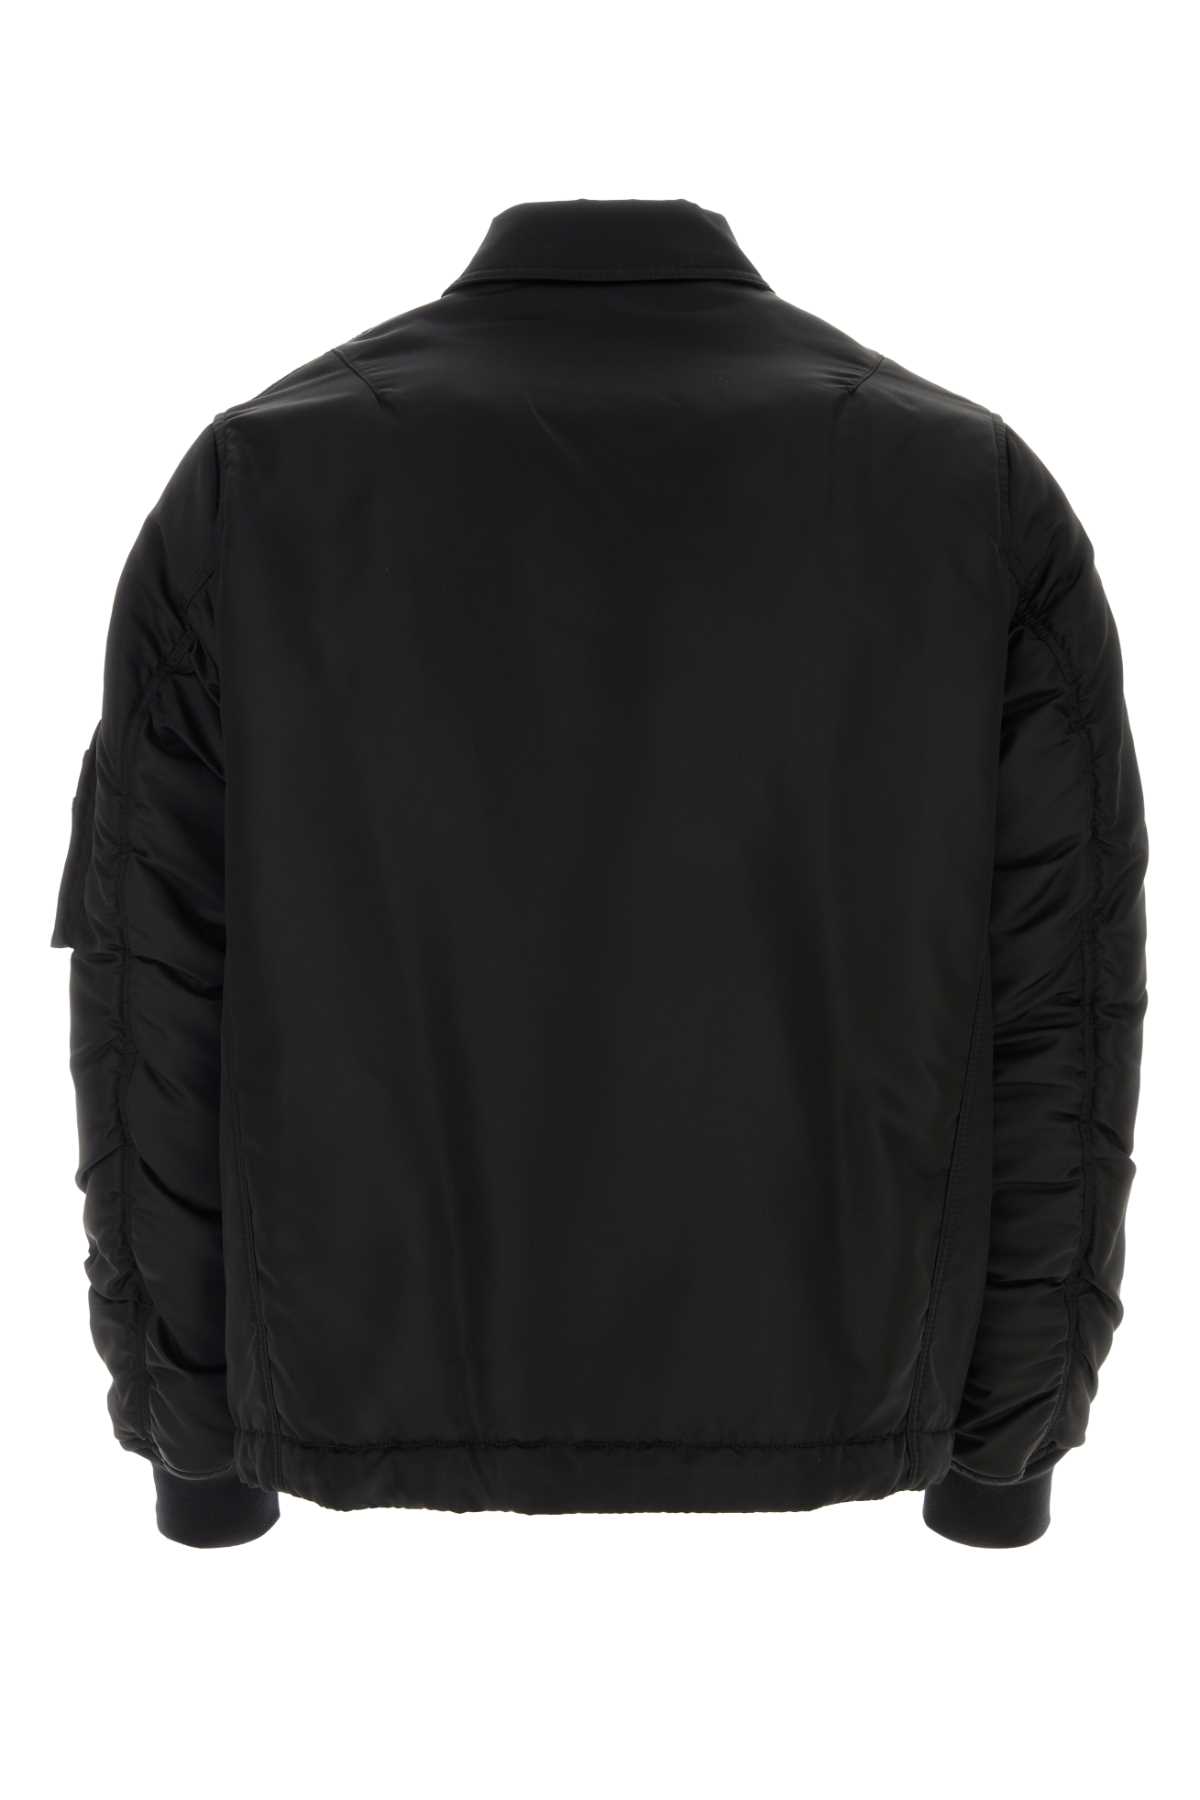 Alexander Mcqueen Black Nylon Jacket